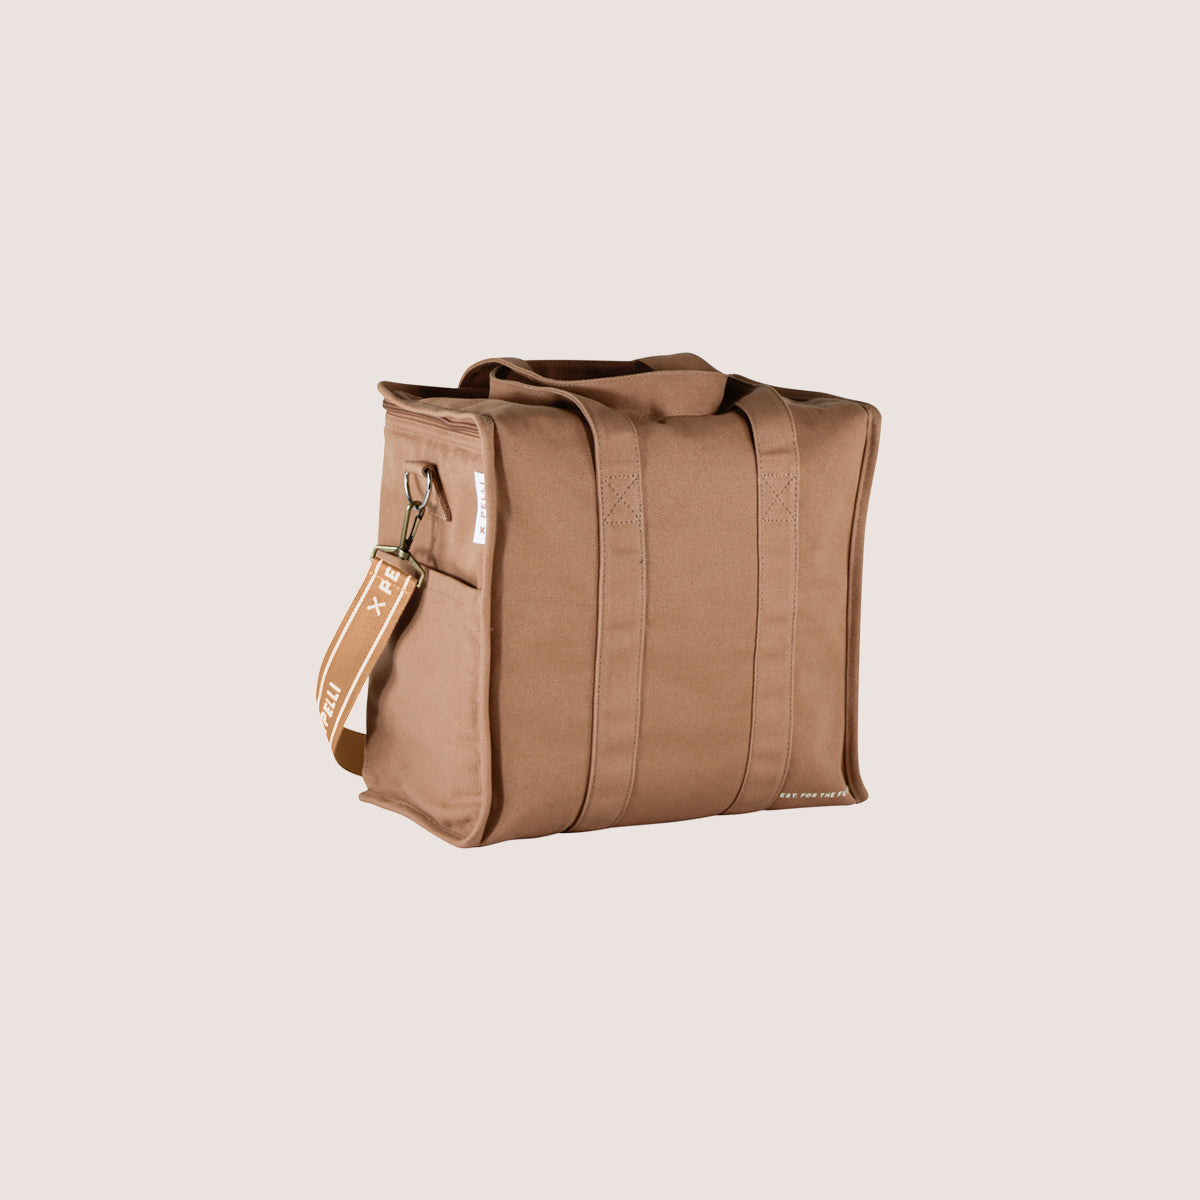 OK Chill Crossbody - Canvas Medium Cooler Bag with Shoulder Strap in Ginger